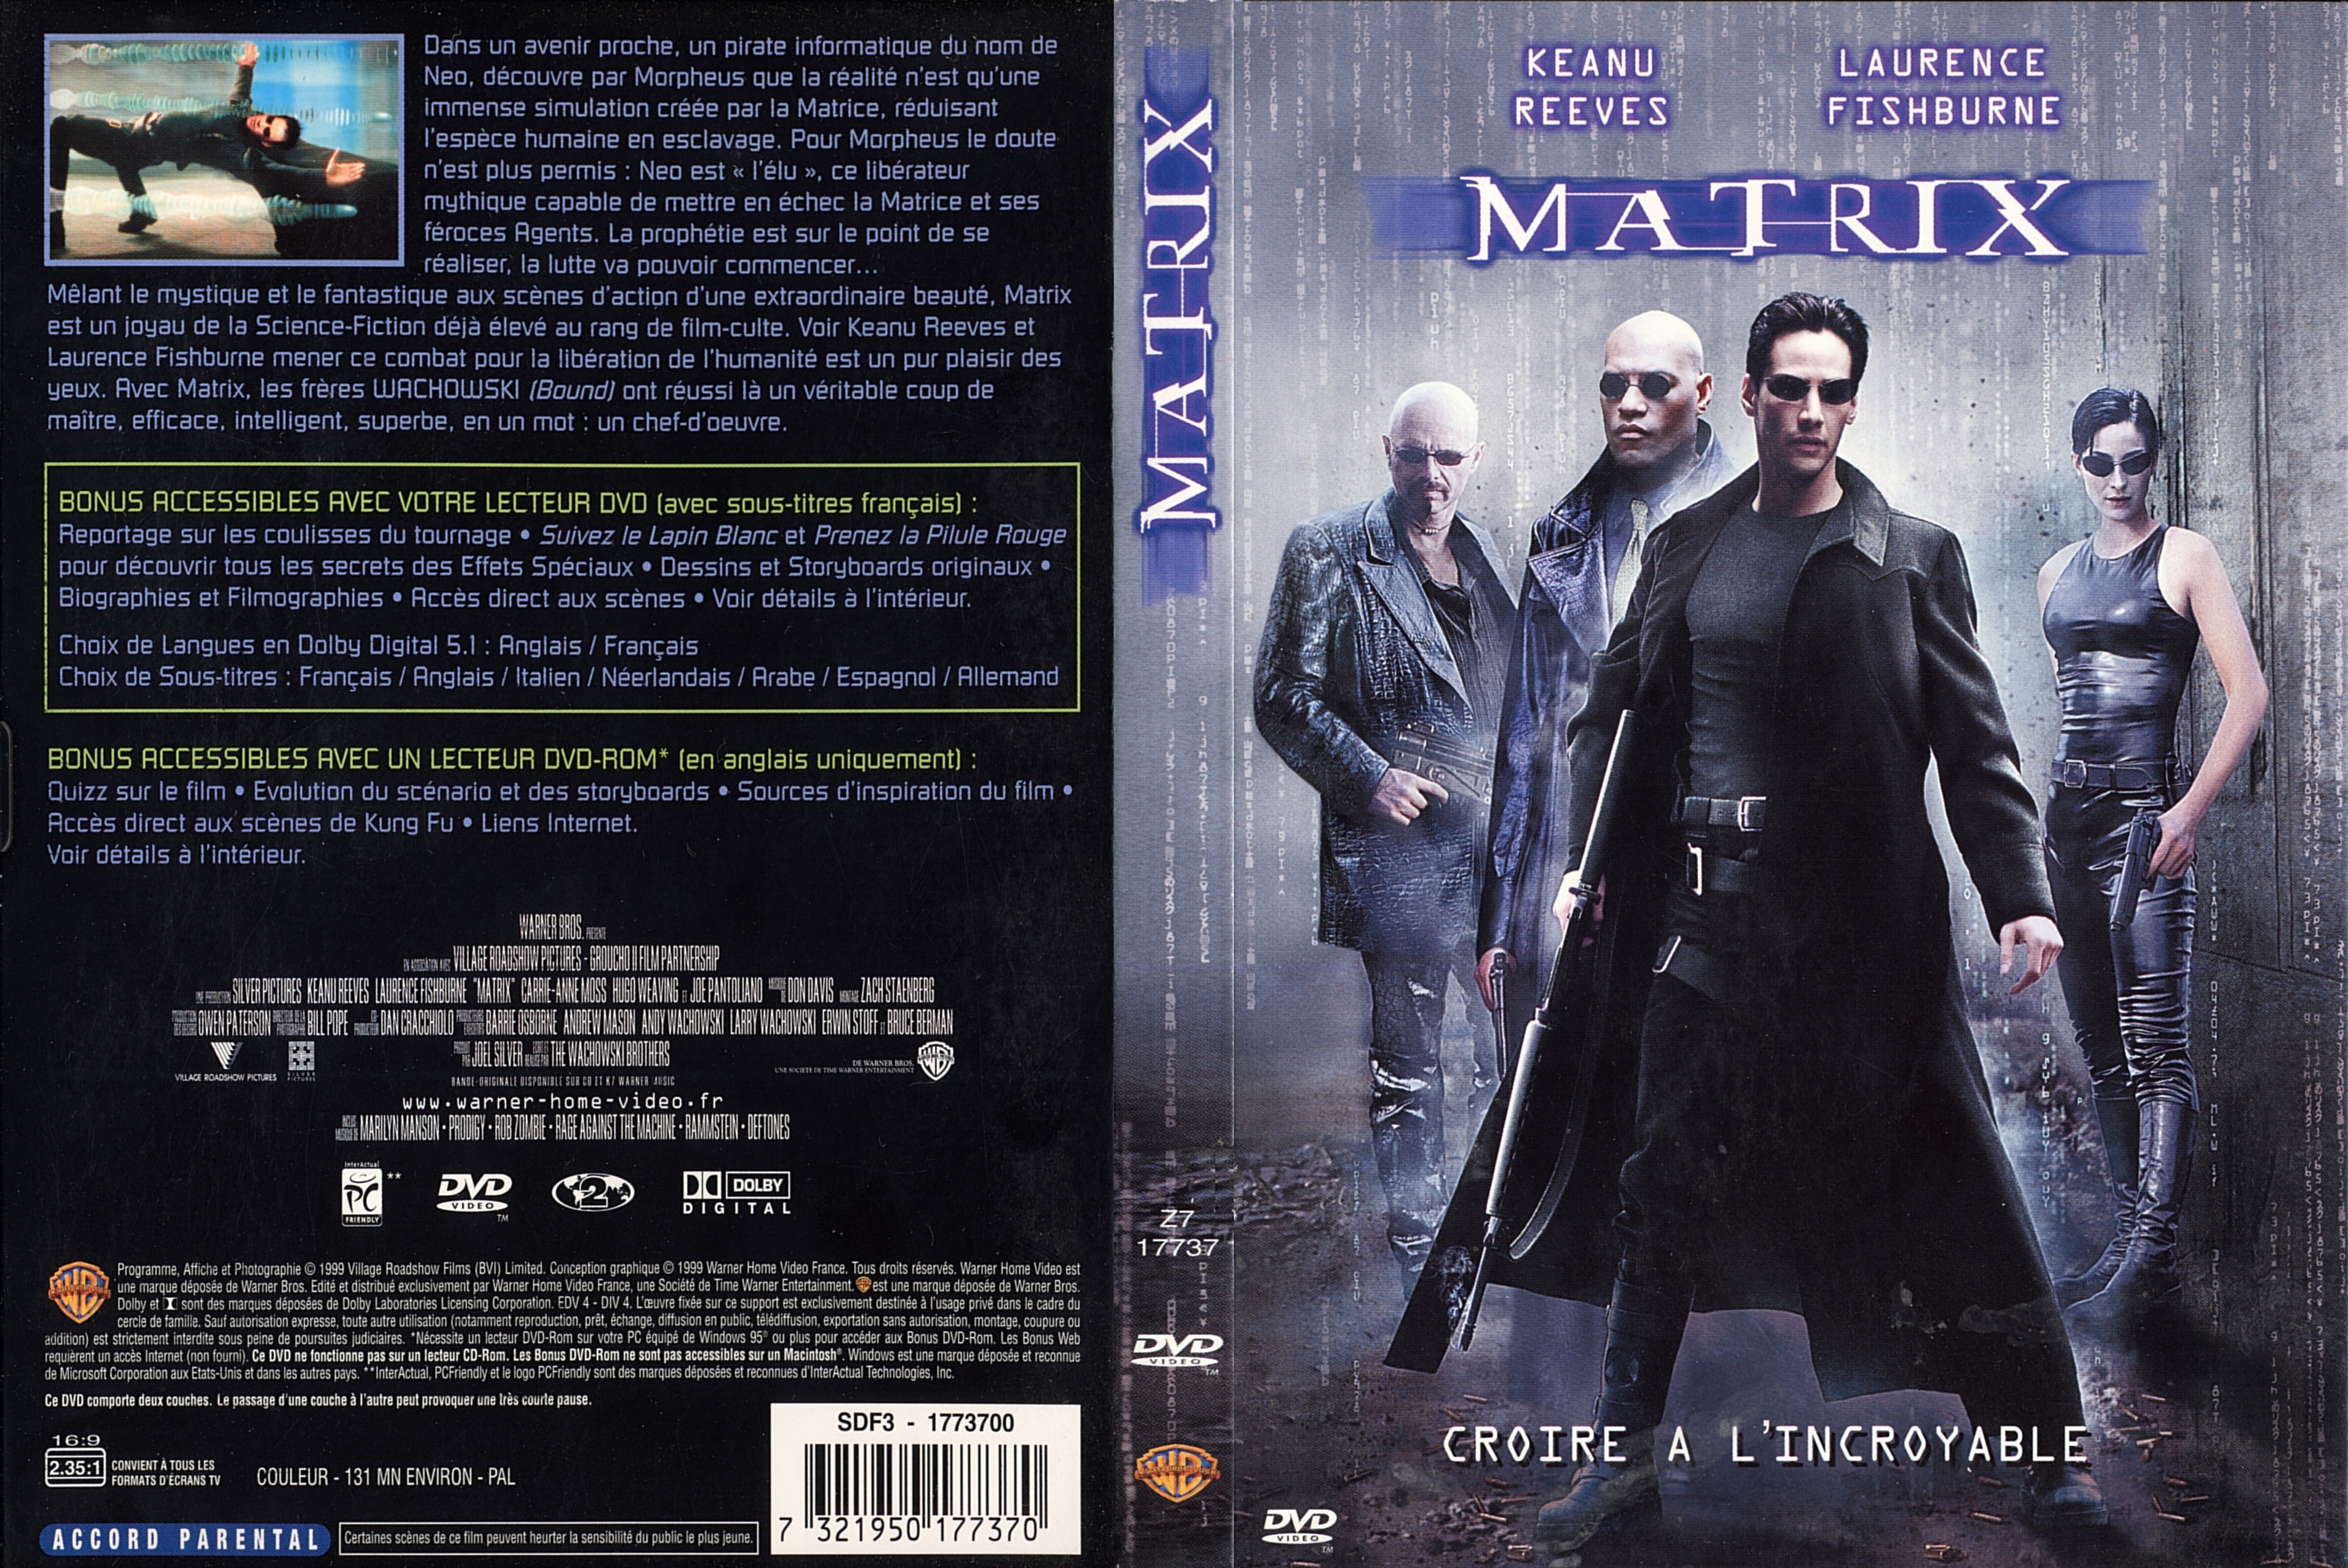 The Matrix Dvd